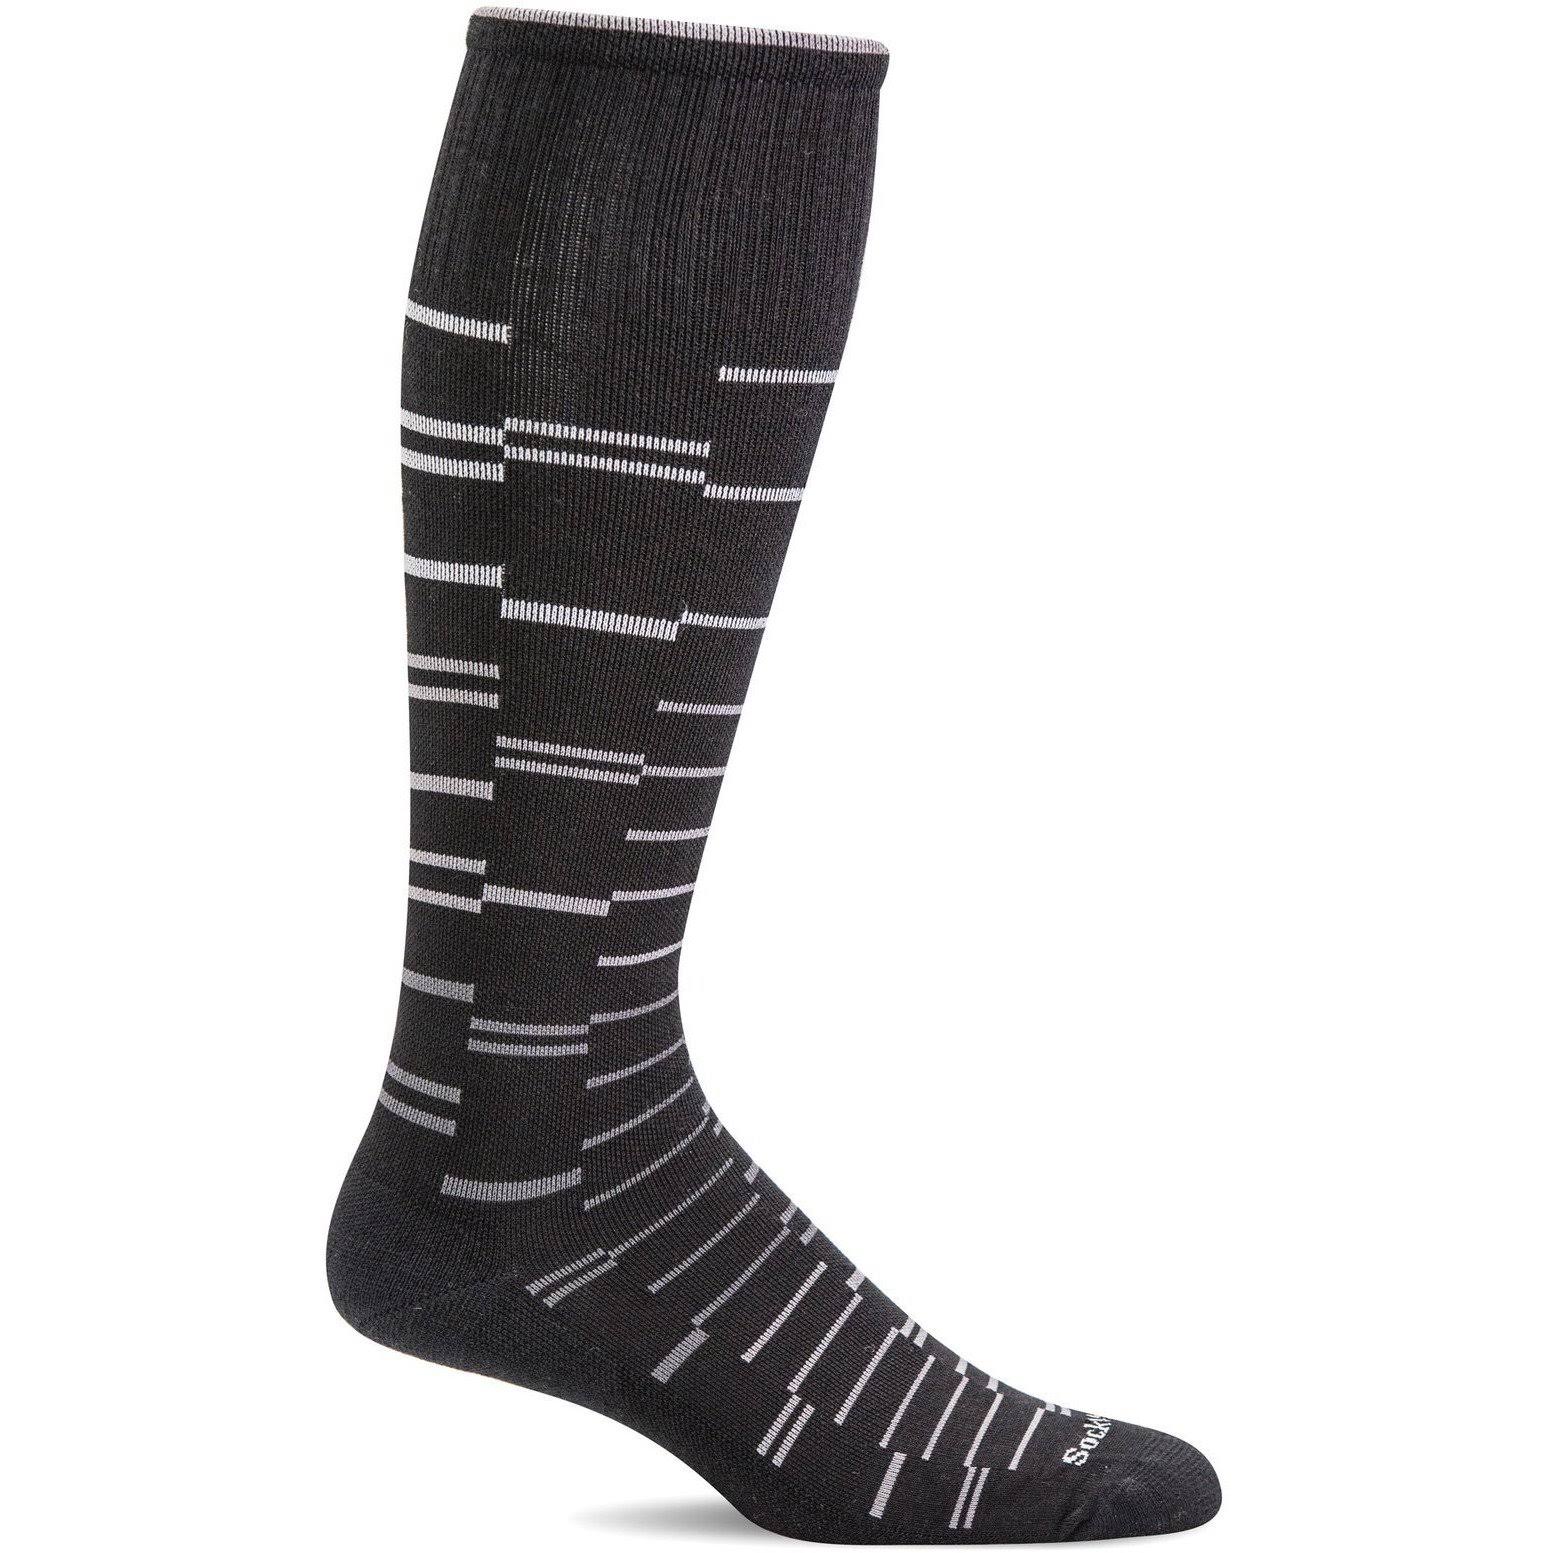 Sockwell Men's Dashing Moderate Compression Socks